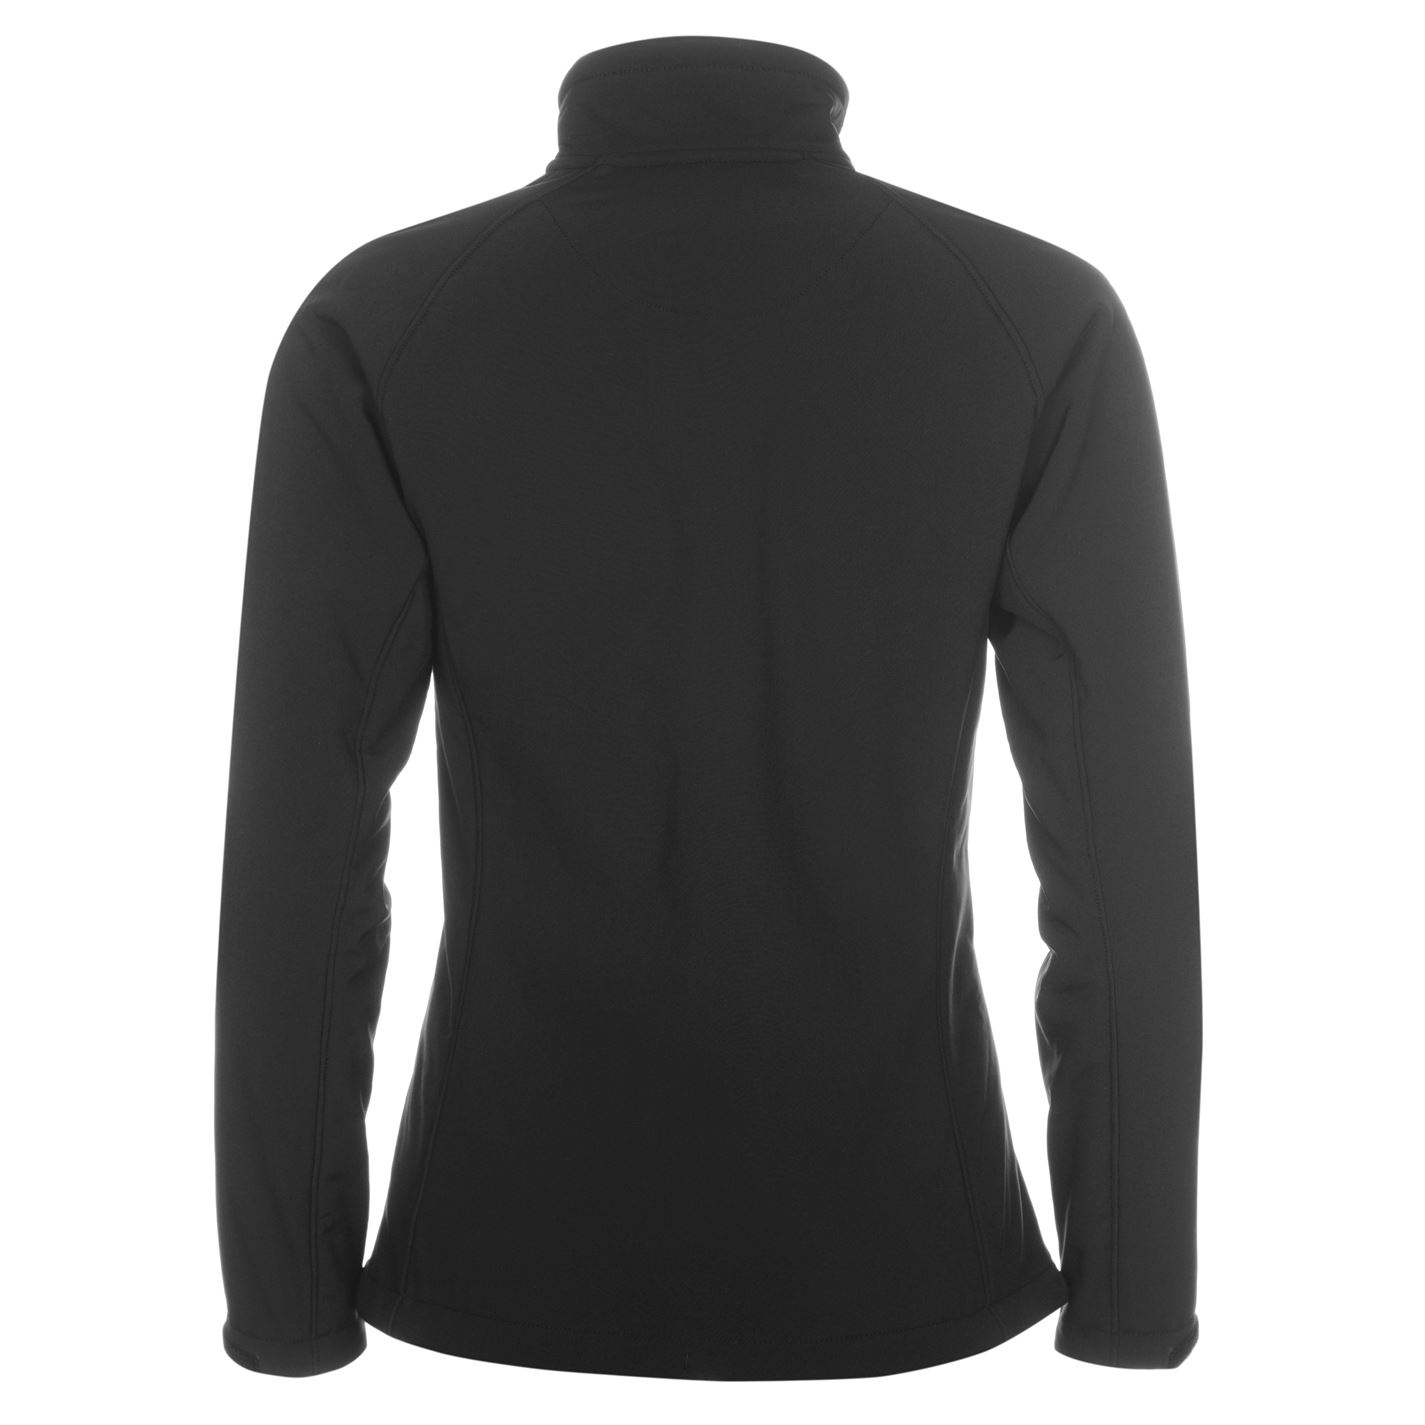 Karrimor Glacier SS Ladies Softshell Jacket Coat Top | eBay